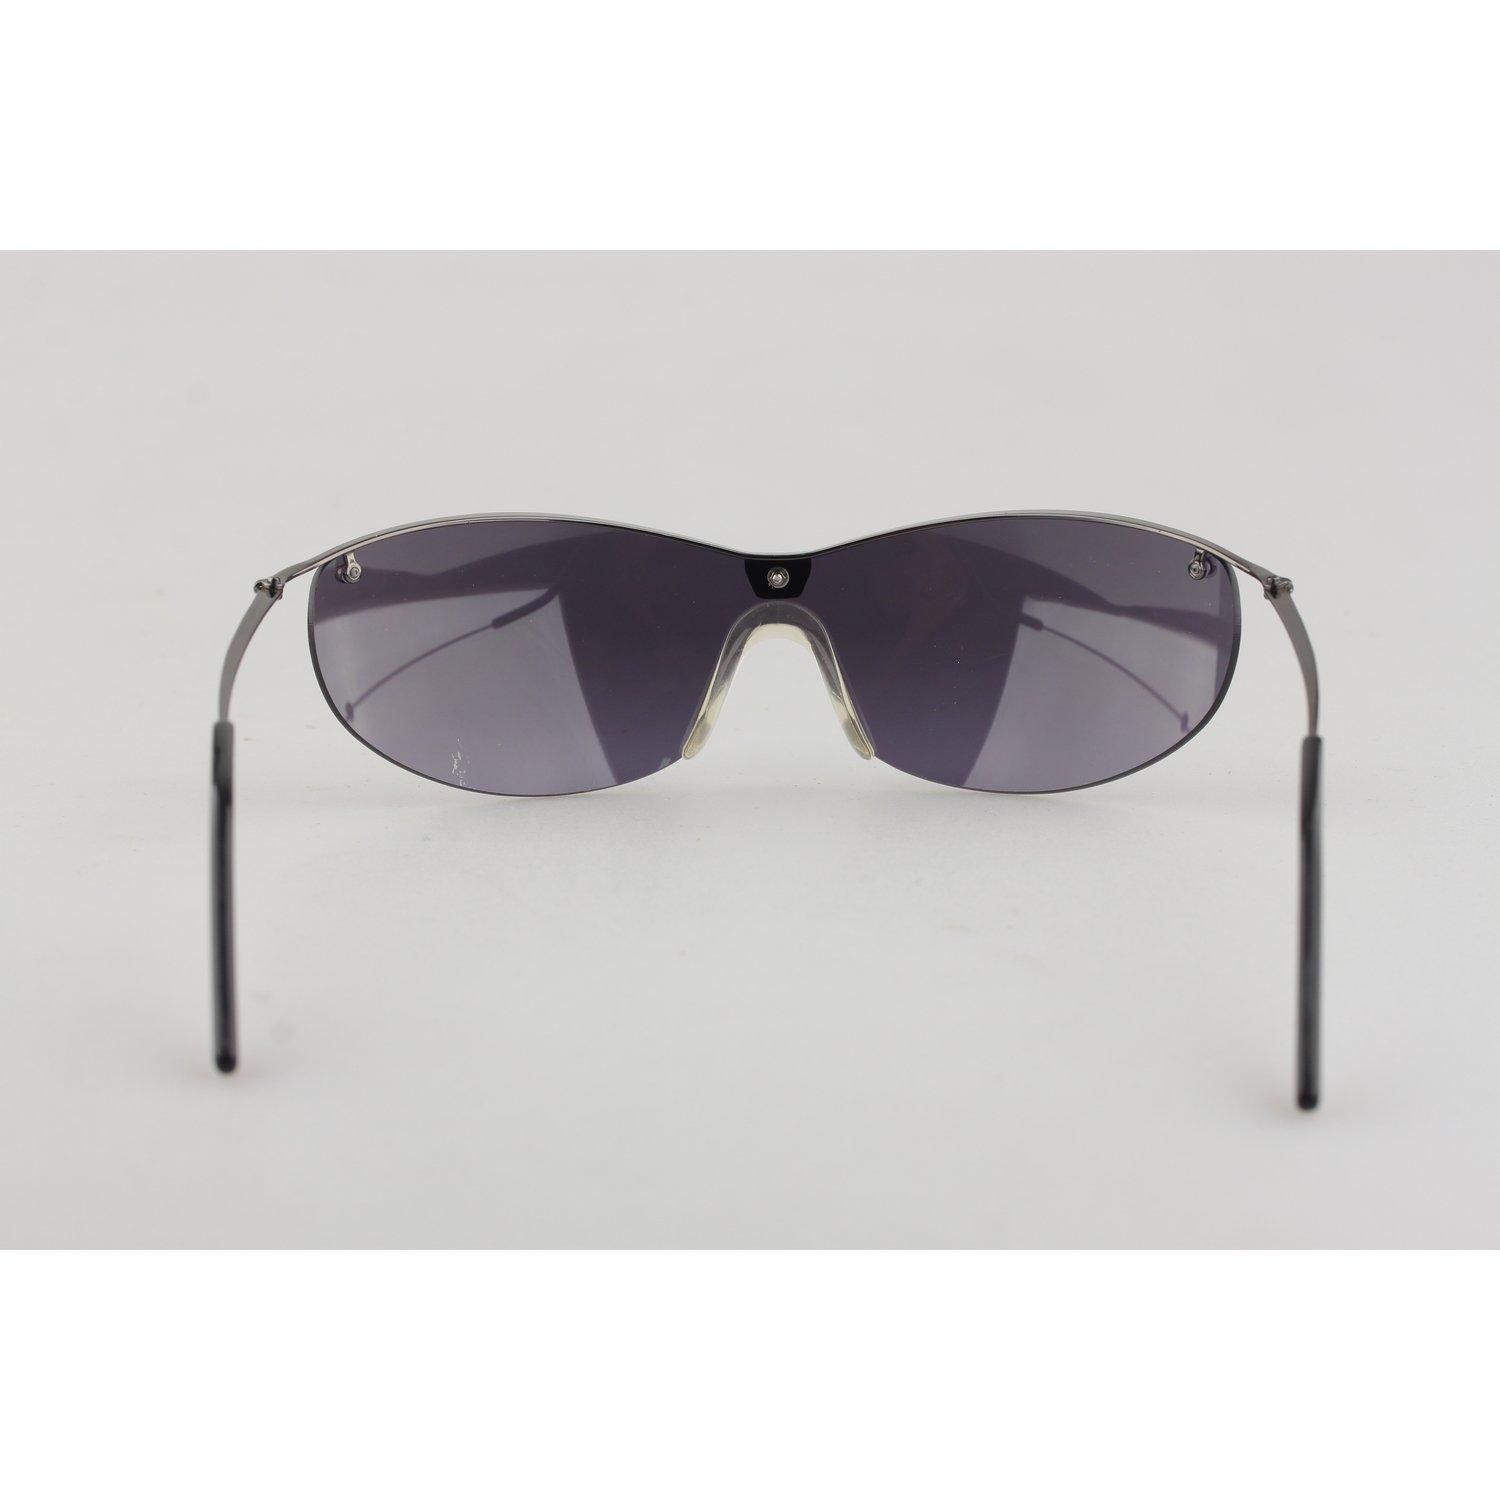 Giorgio Armani Vintage Half-Rim Wrap Sunglasses 1542 125mm New Old Stock 1